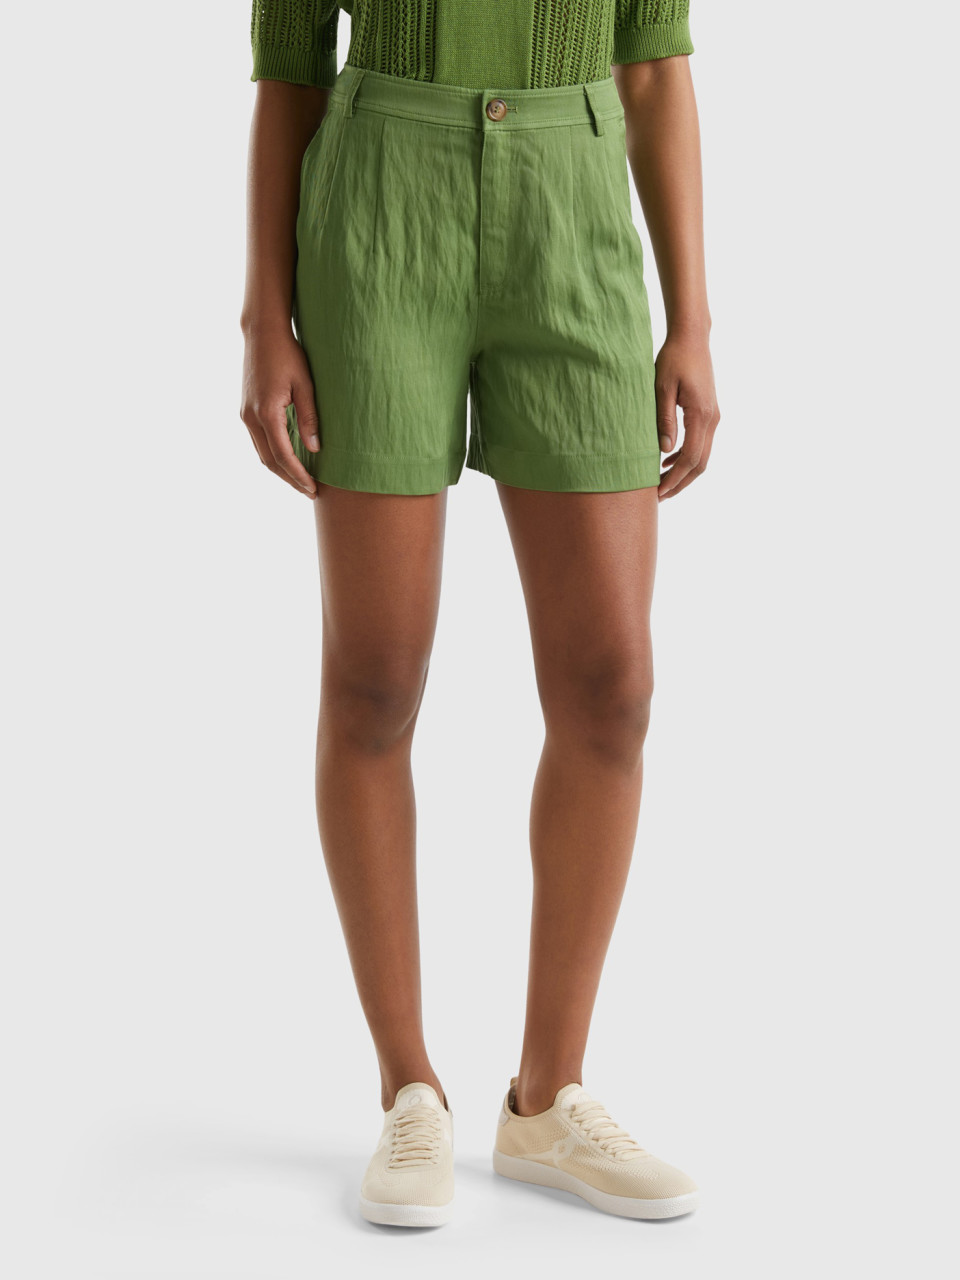 Benetton, Bermuda Shorts In Sustainable Viscose Blend, Military Green, Women